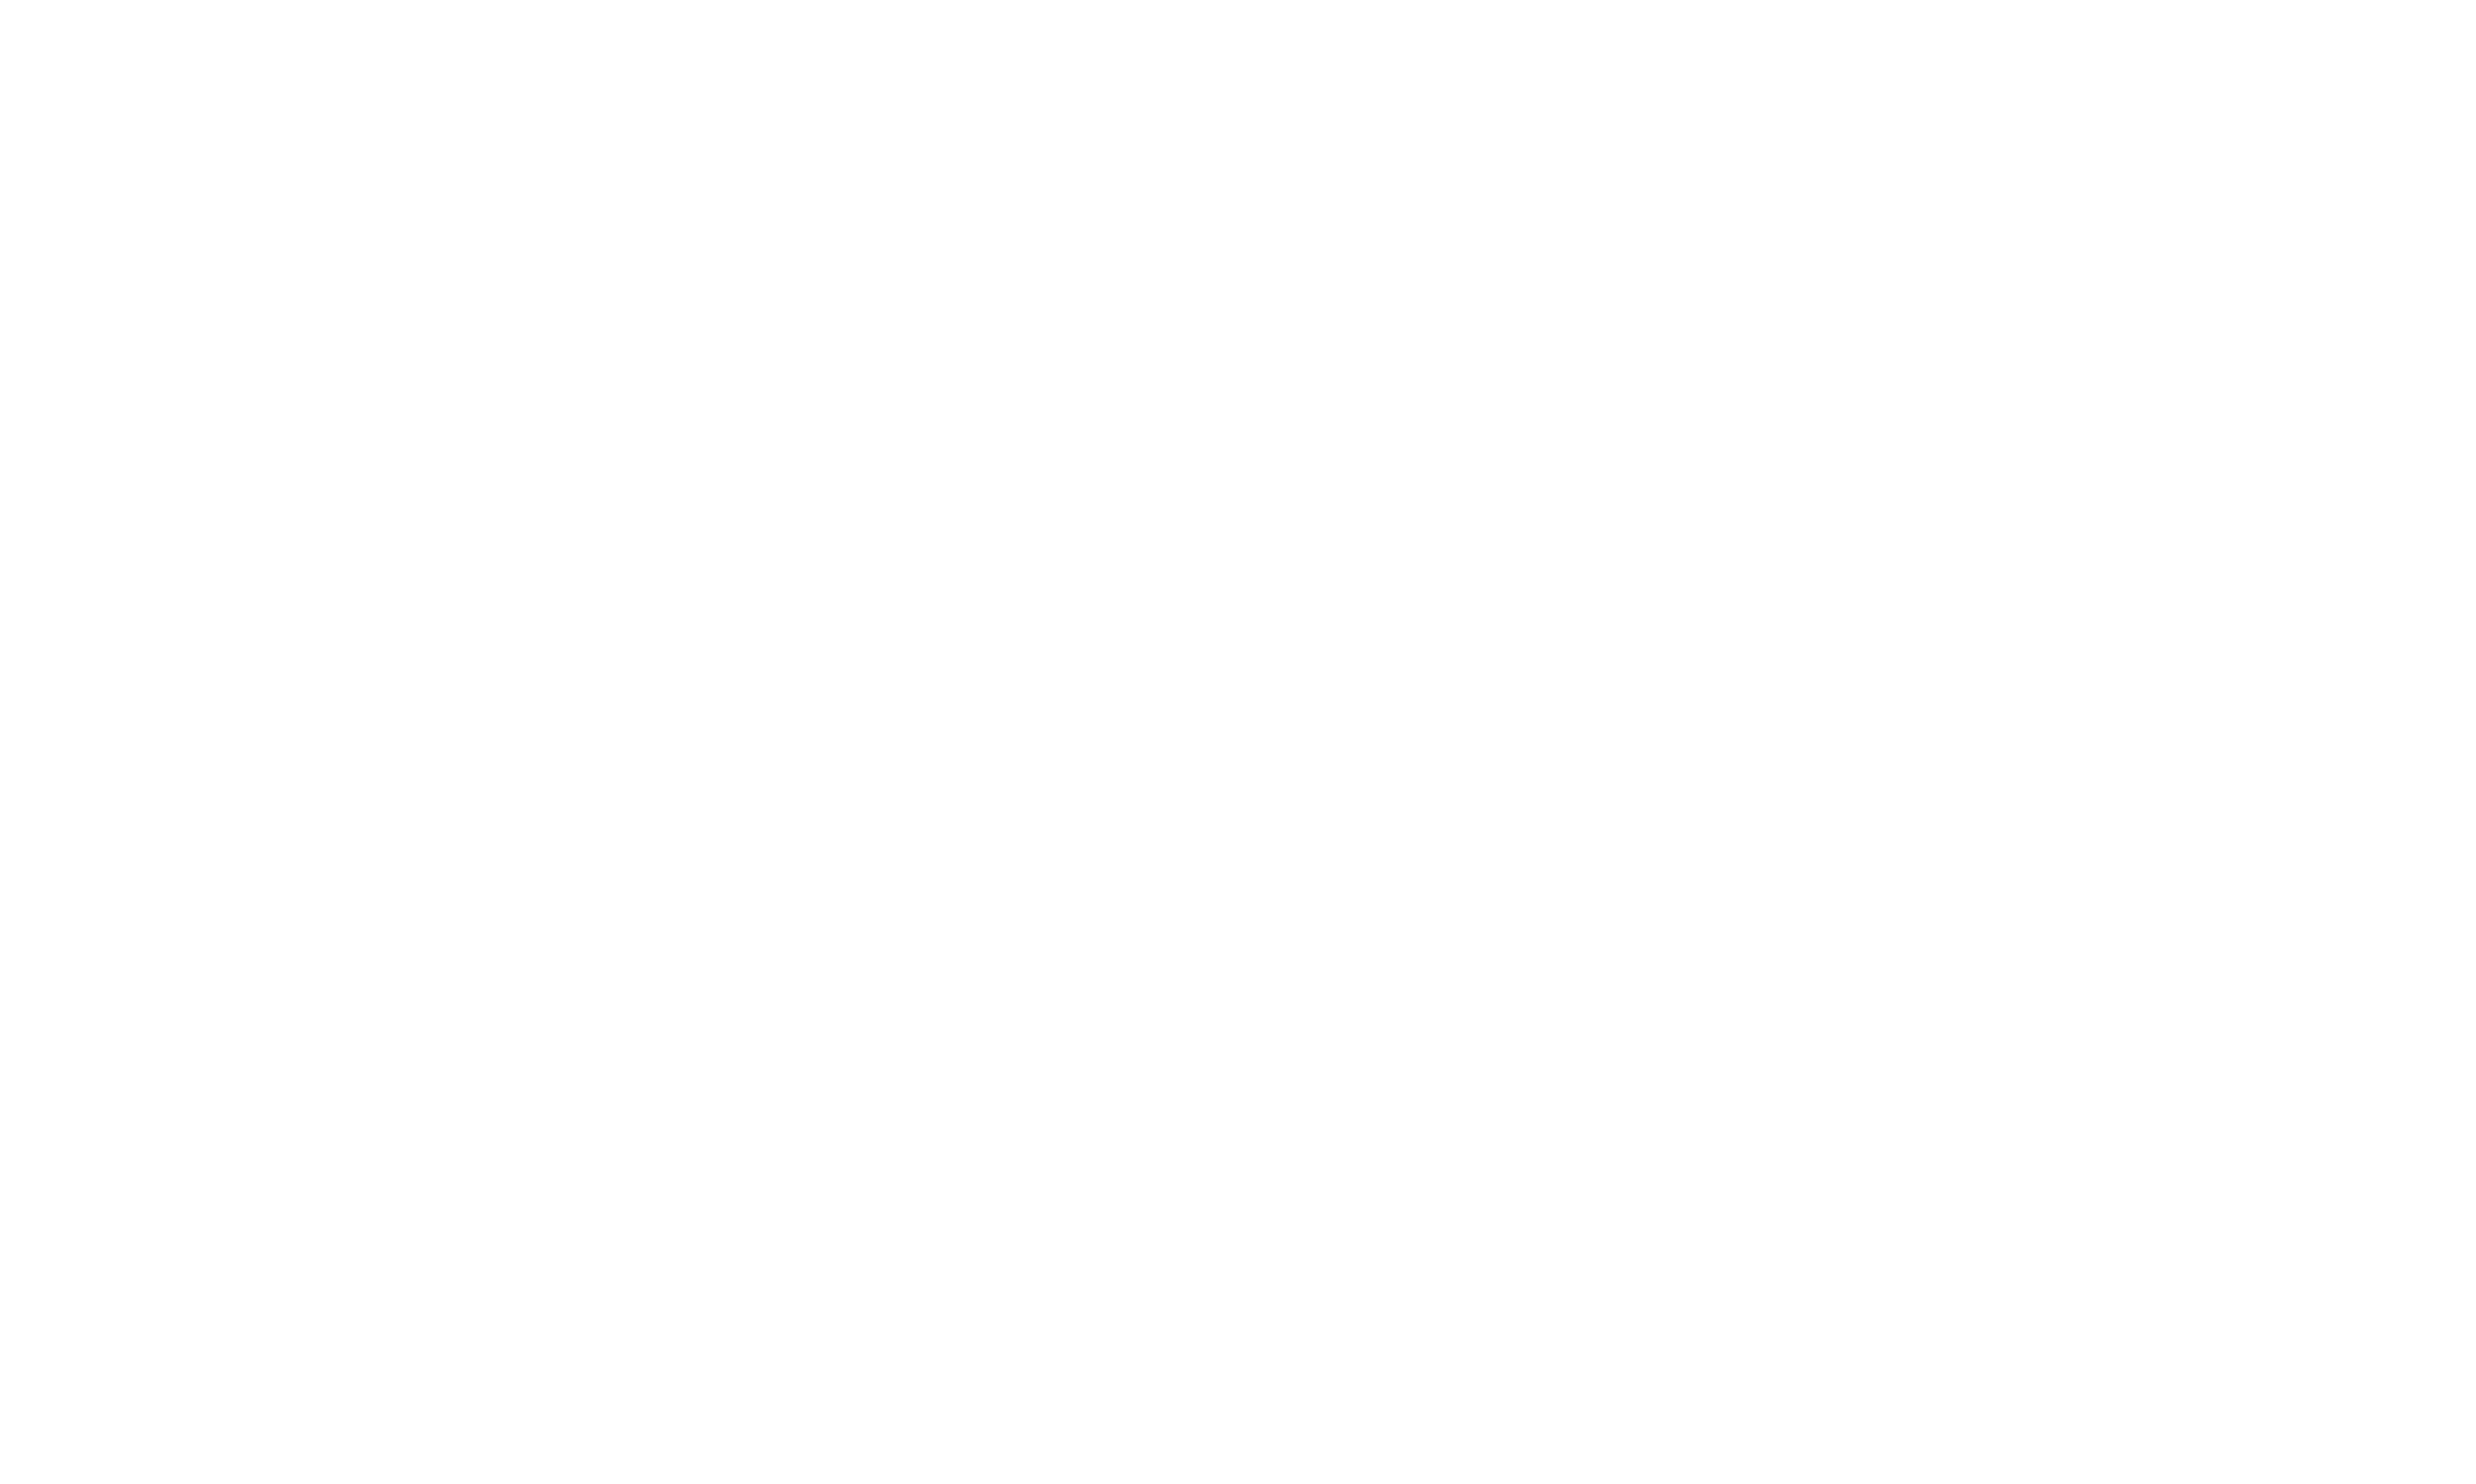 Mississippi Export Railroad 100 Anniversary Logo